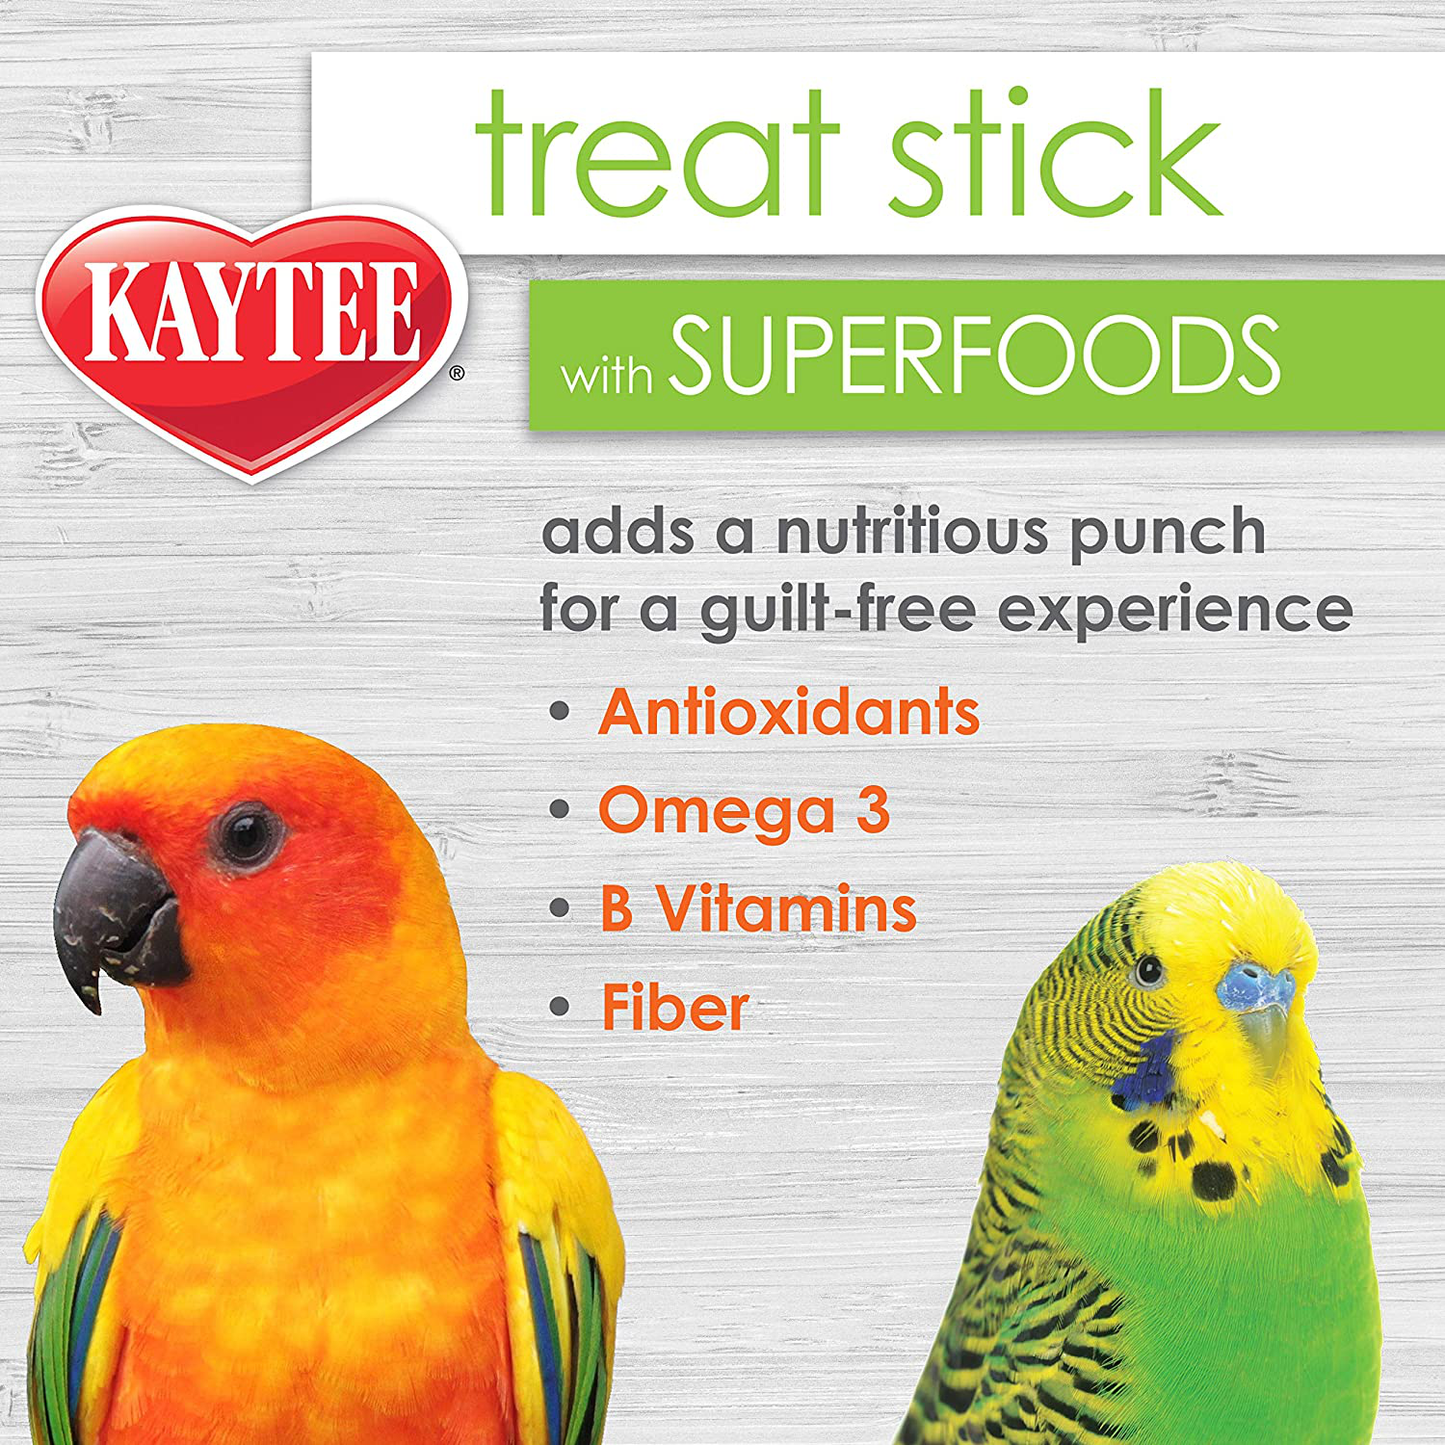 Kaytee Avian Superfood Treat Stick Spinach & Kale 5.5Oz